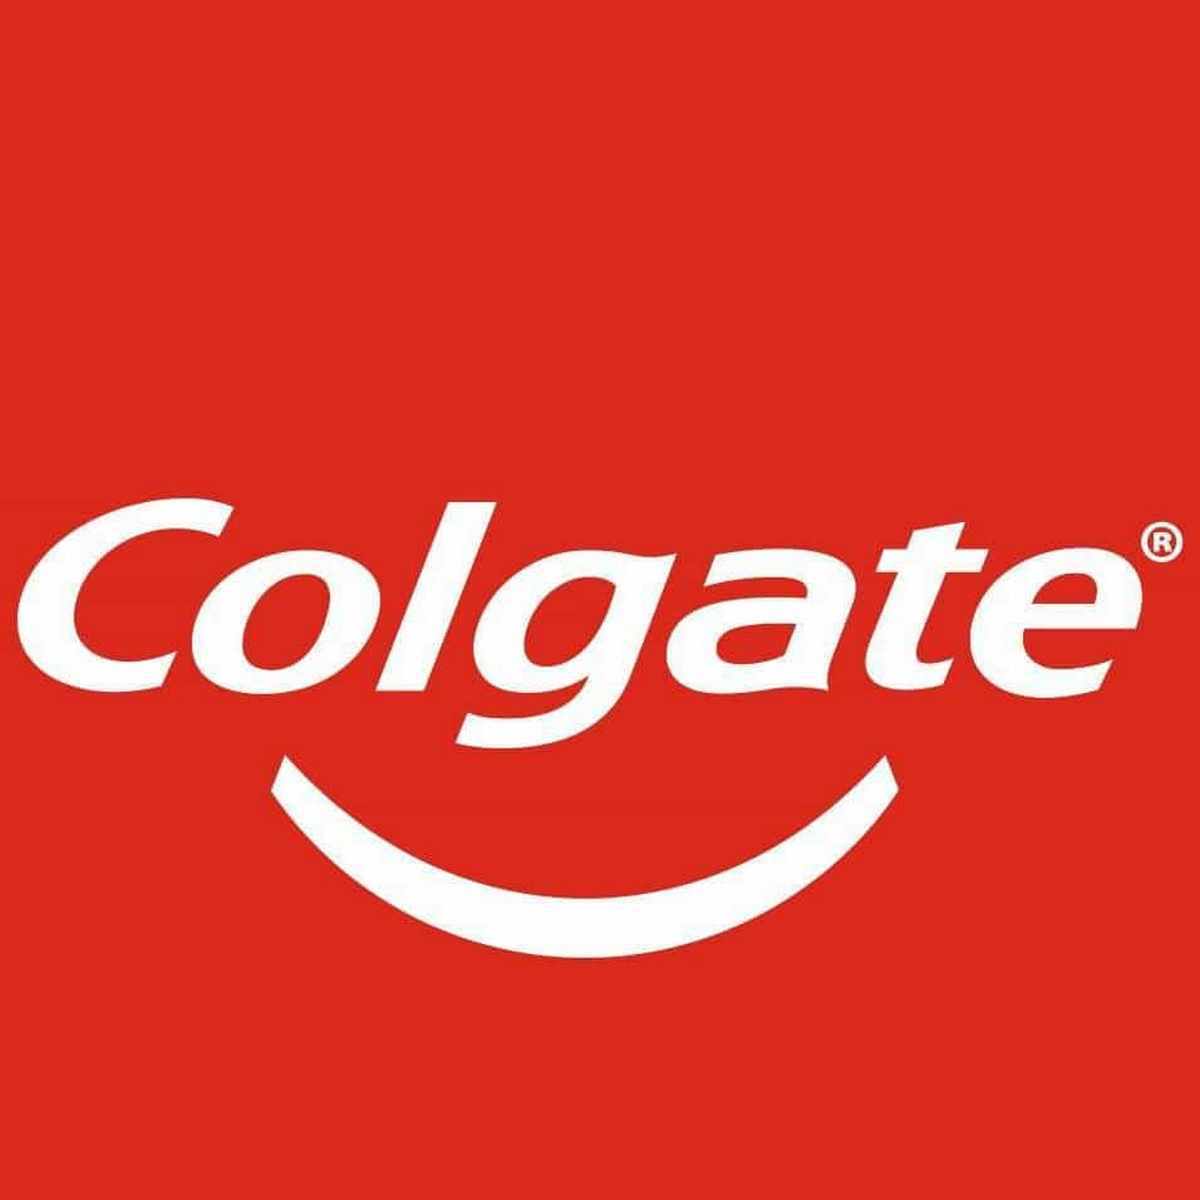 colgate-swot-analysis-swot-analysis-of-colgate-marketing91